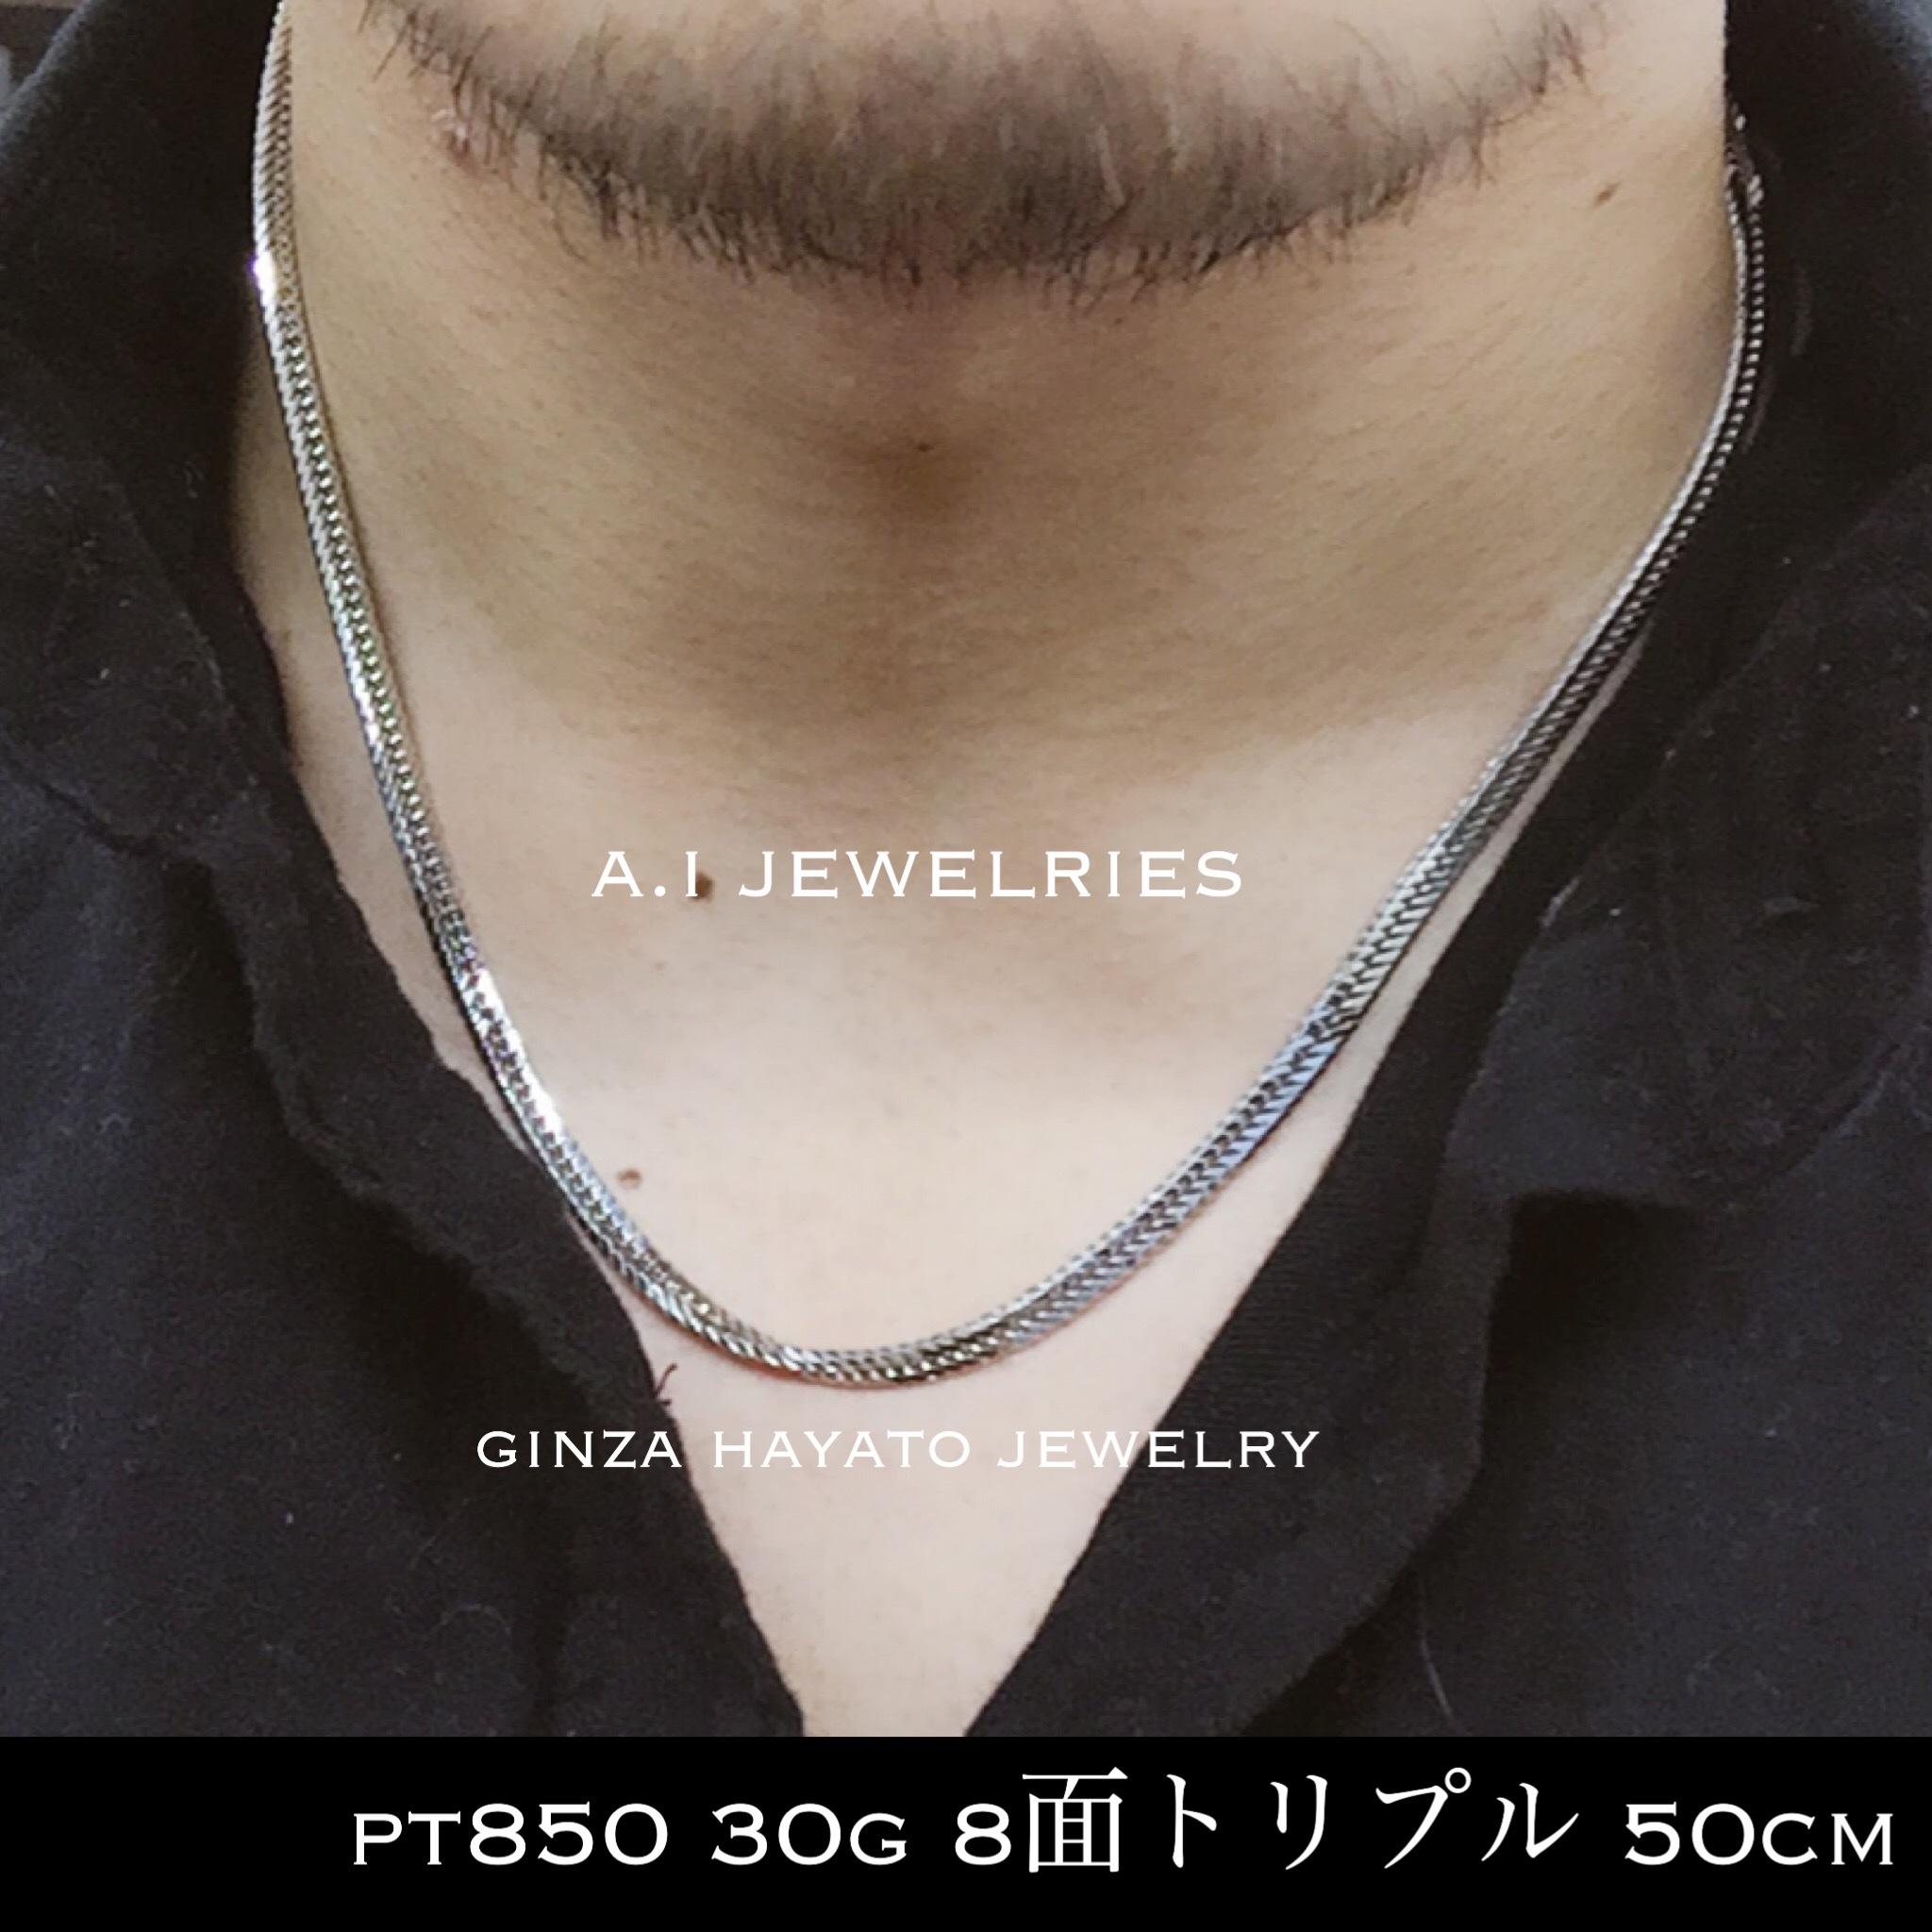 Pt850 プラチナ850 30g 50cm 8面トリプル 喜平 ネックレス メンズ チェーン 資産 A I Jewelries エイアイジュエリーズ